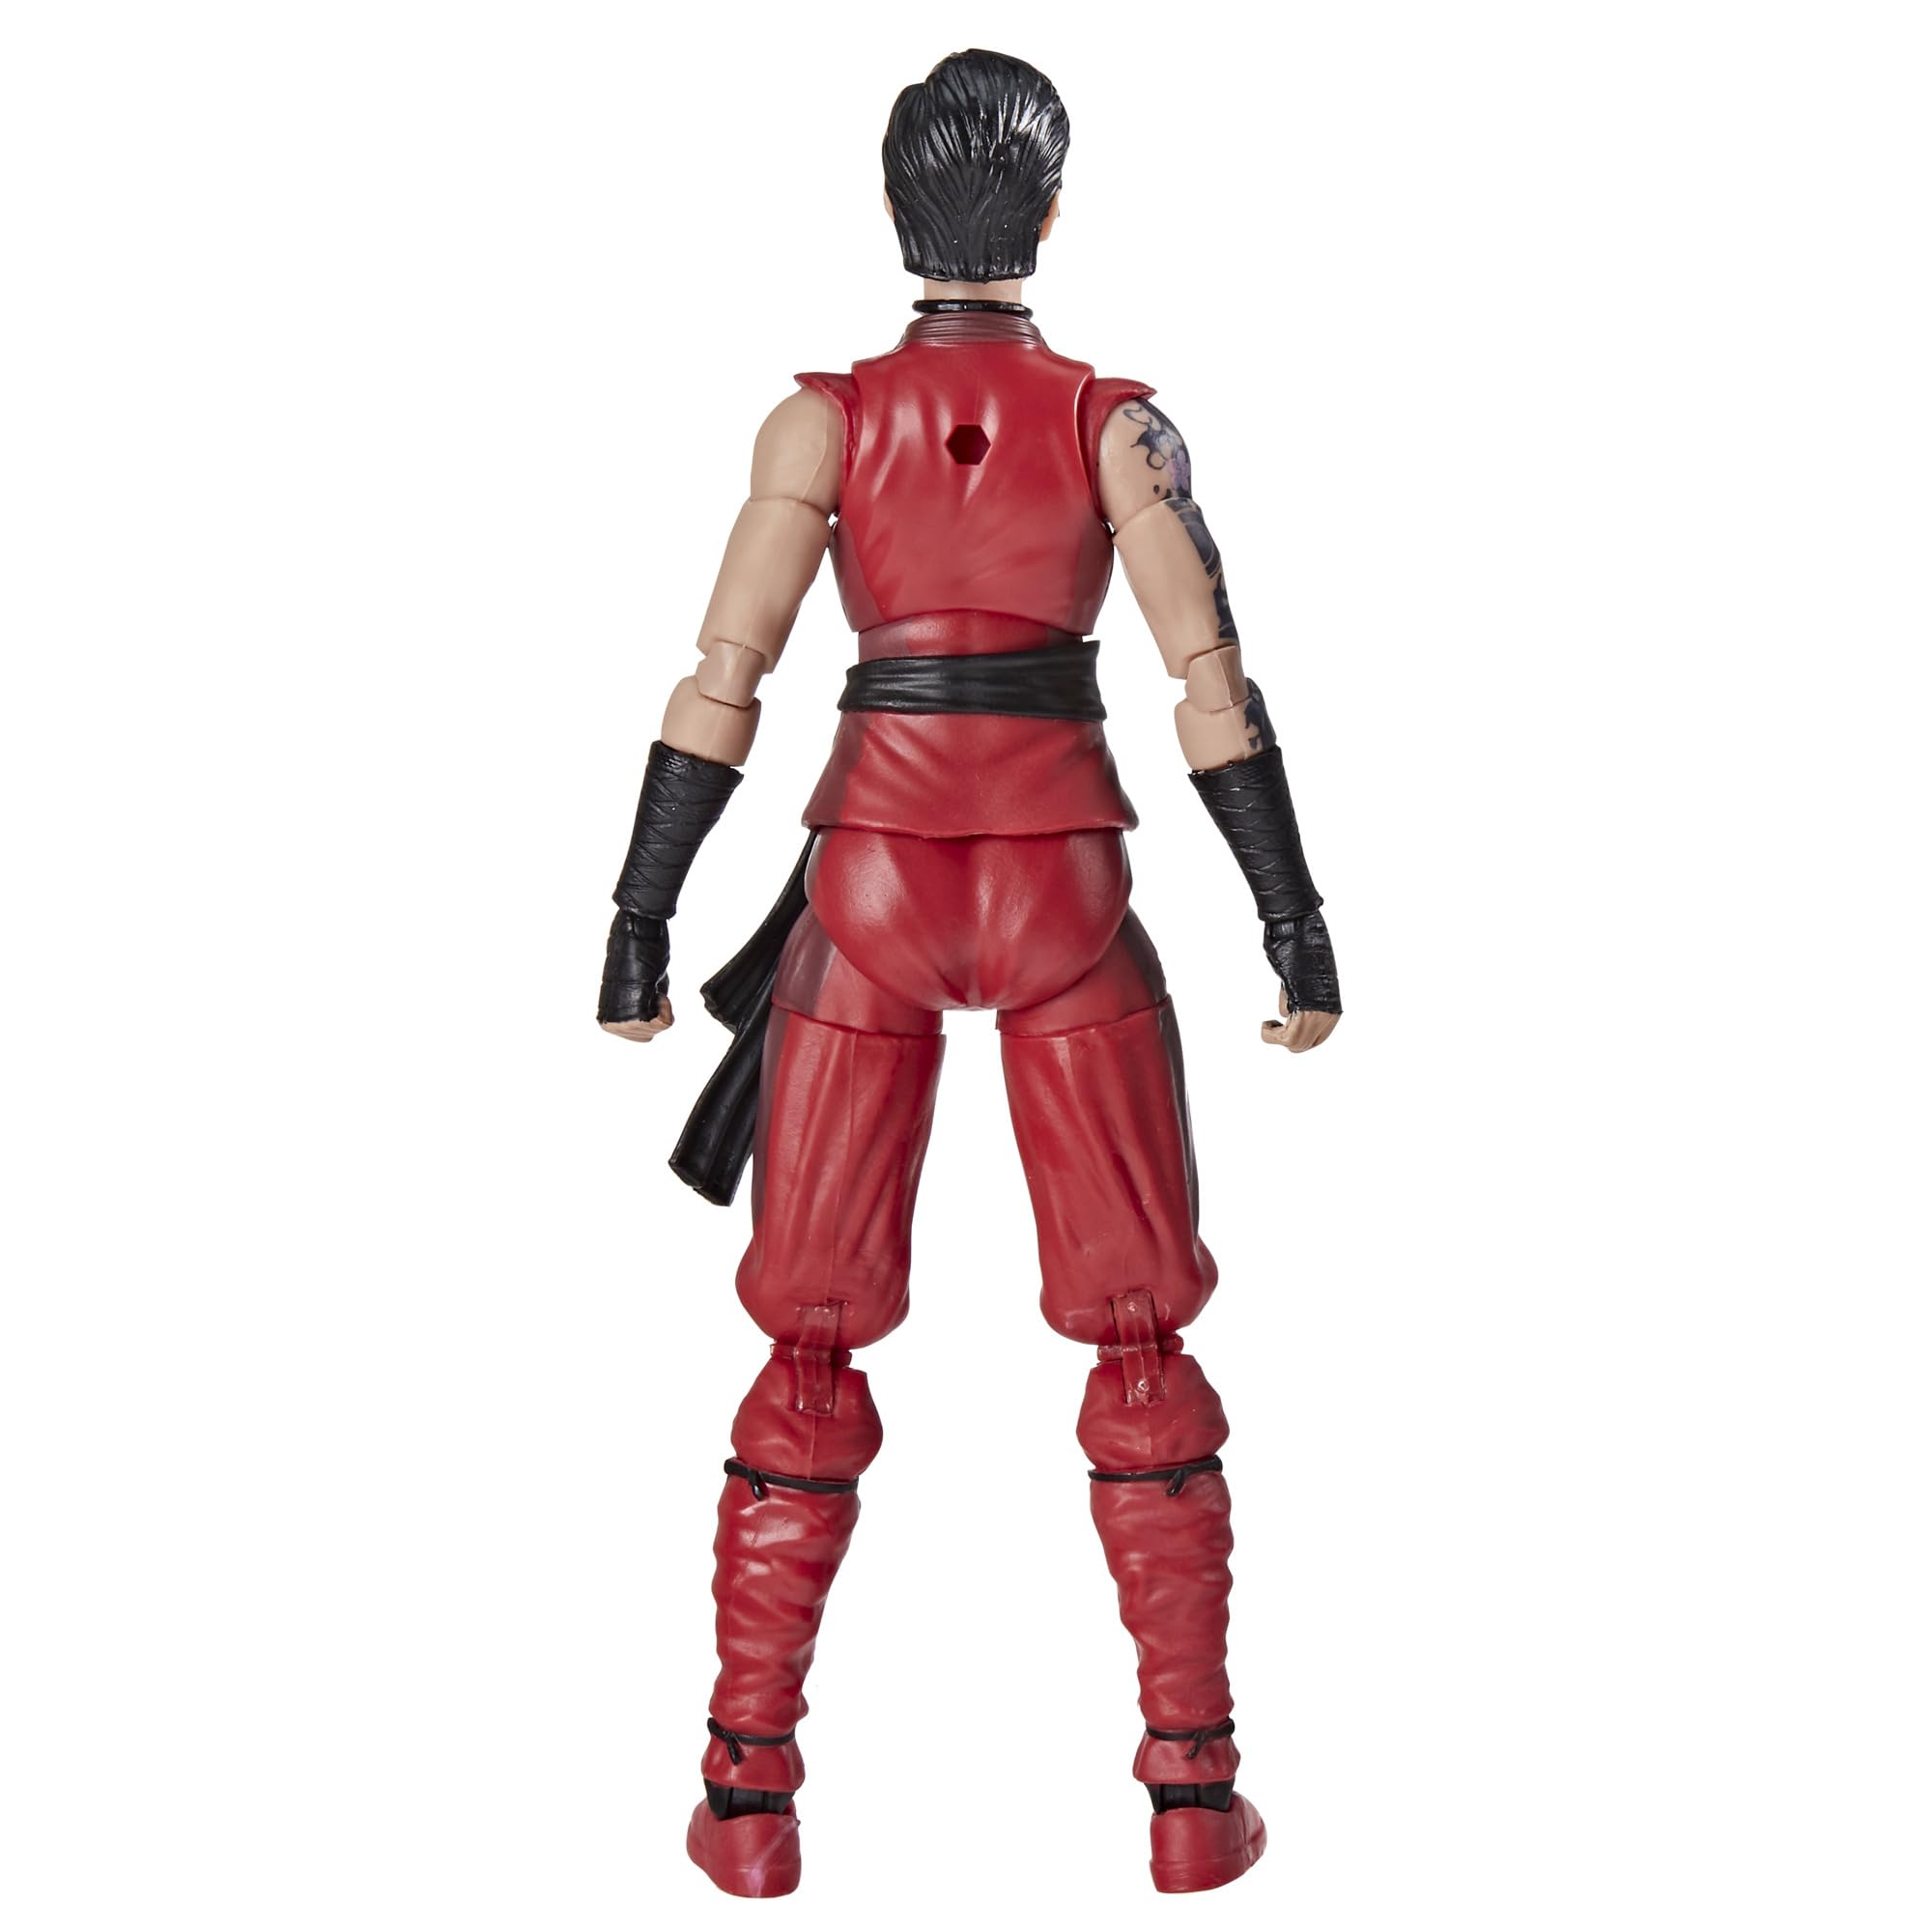 G.I. Joe Classified Series #124, Kim Jinx Arashikage, Collectible 6-Inch Ninja Action Figure with 7 Accessories